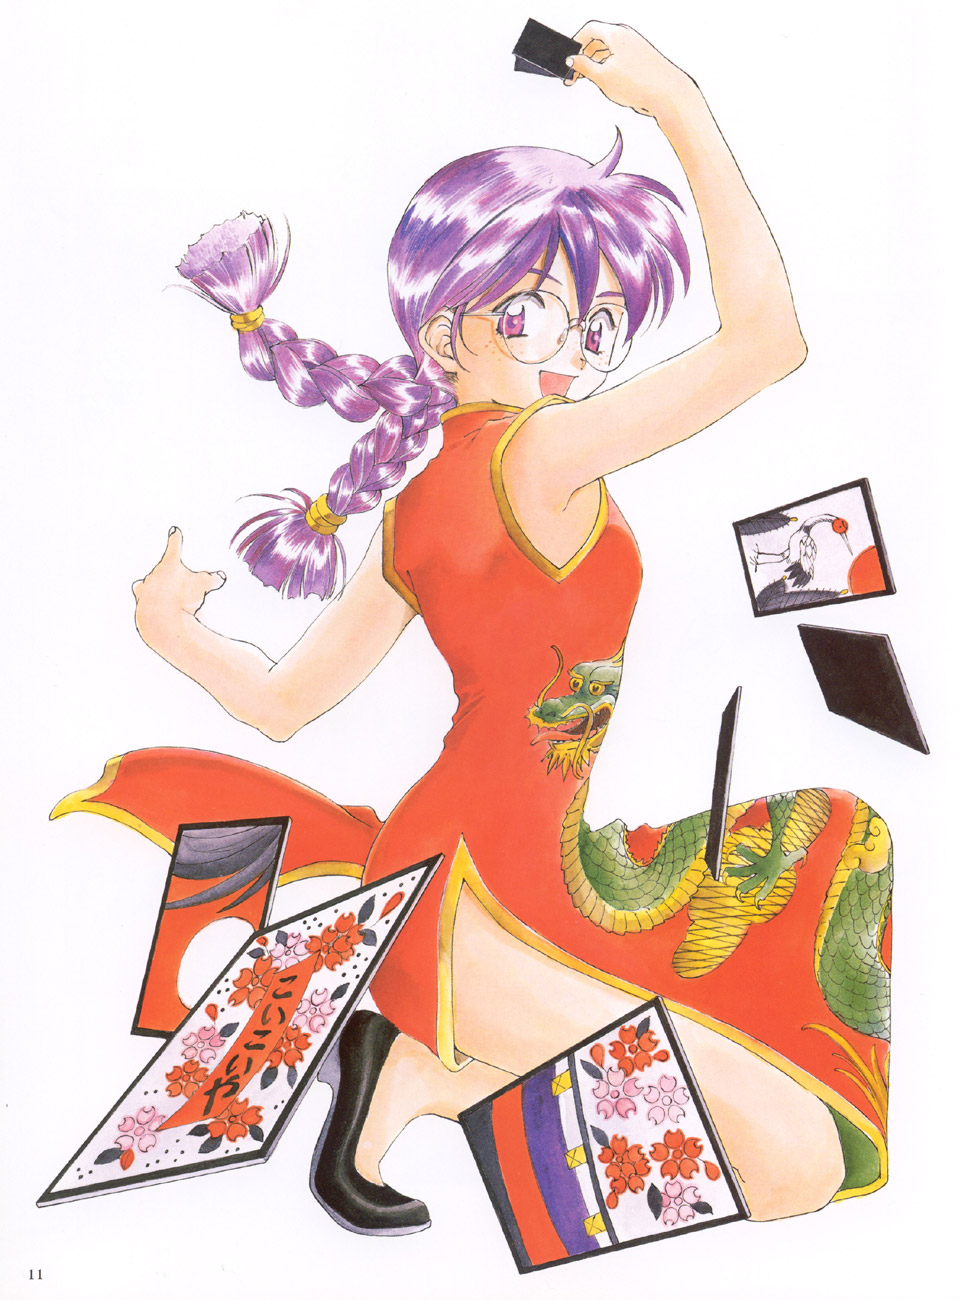 Sakura Wars illustrations: the Origin + Tribute image by Kosuke Fujishima